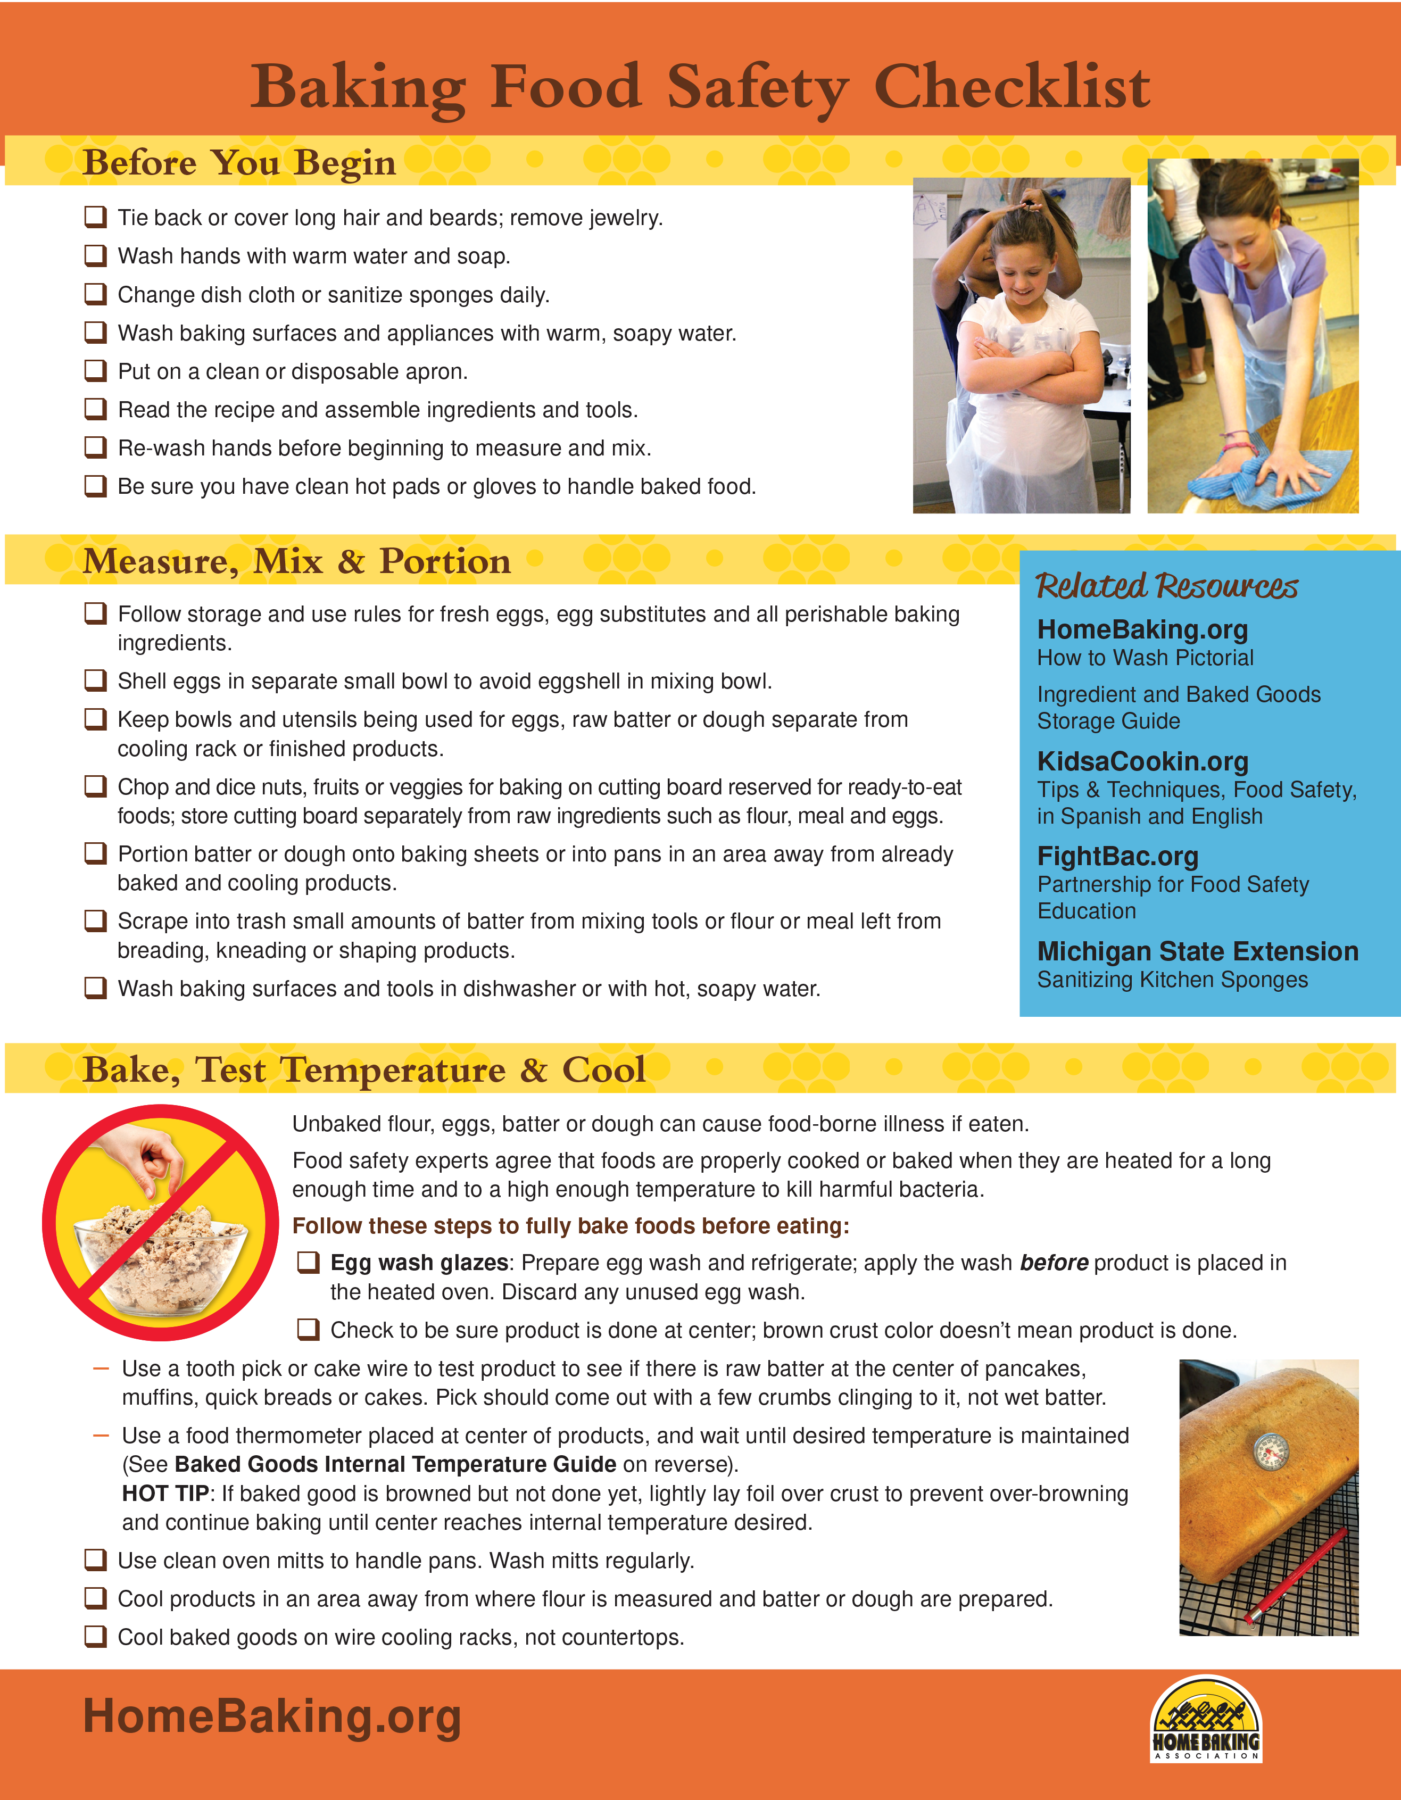 Image: Baking Food Safety Checklist.